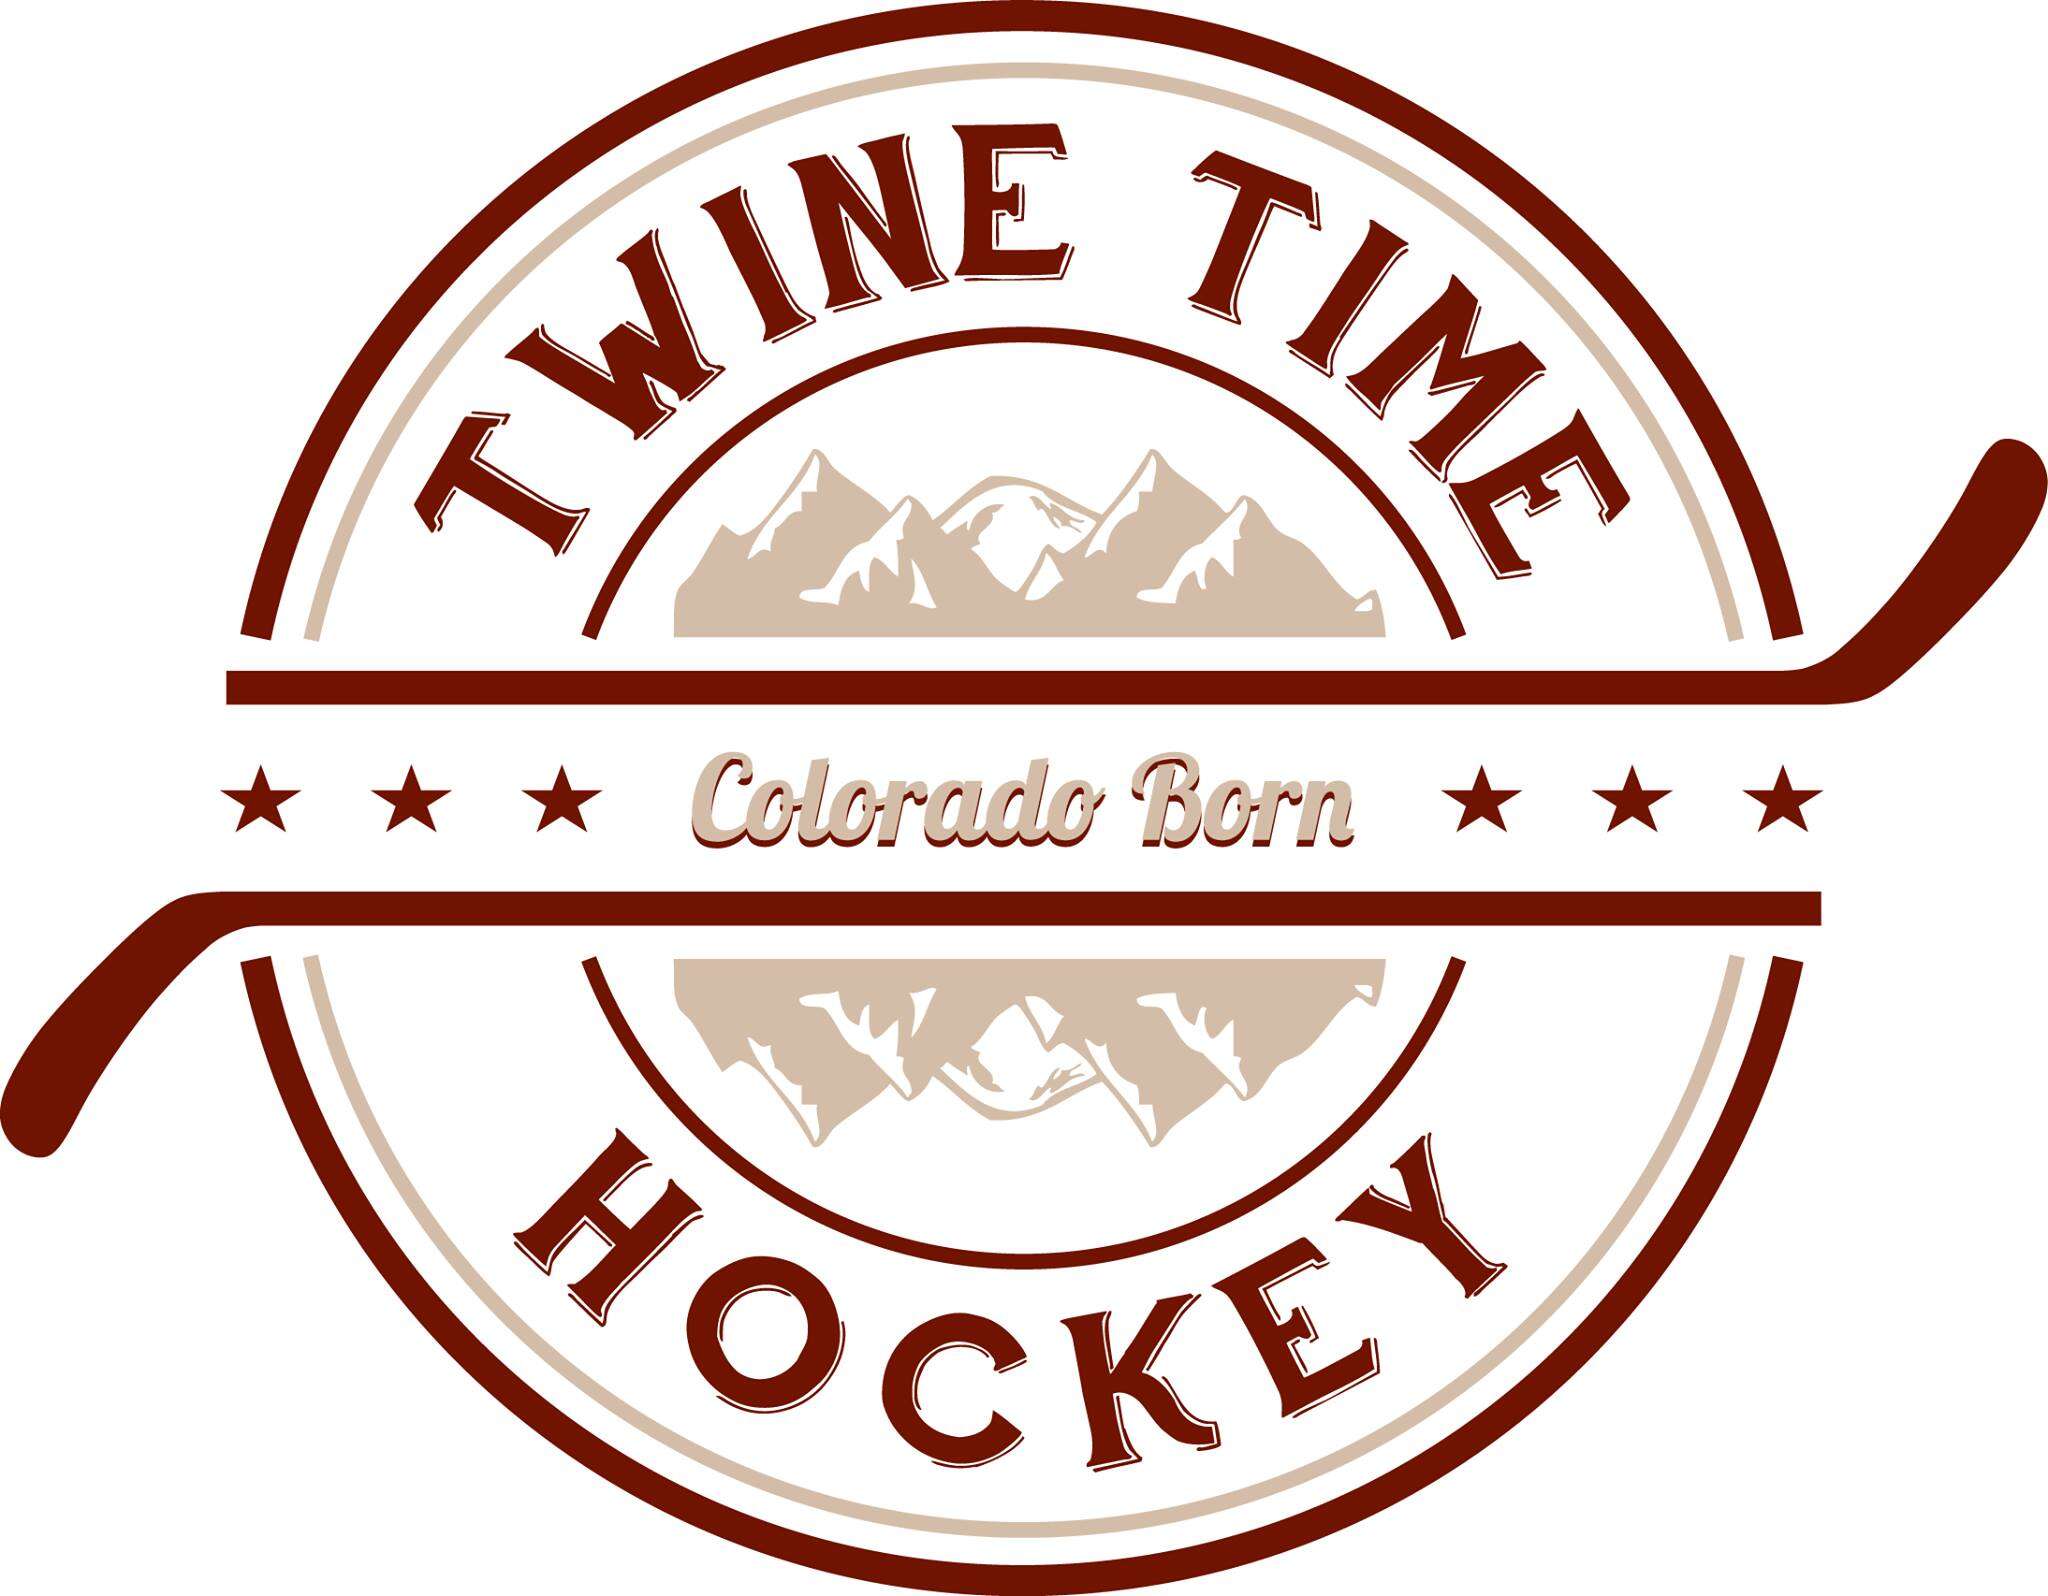 Twine Time Hockey